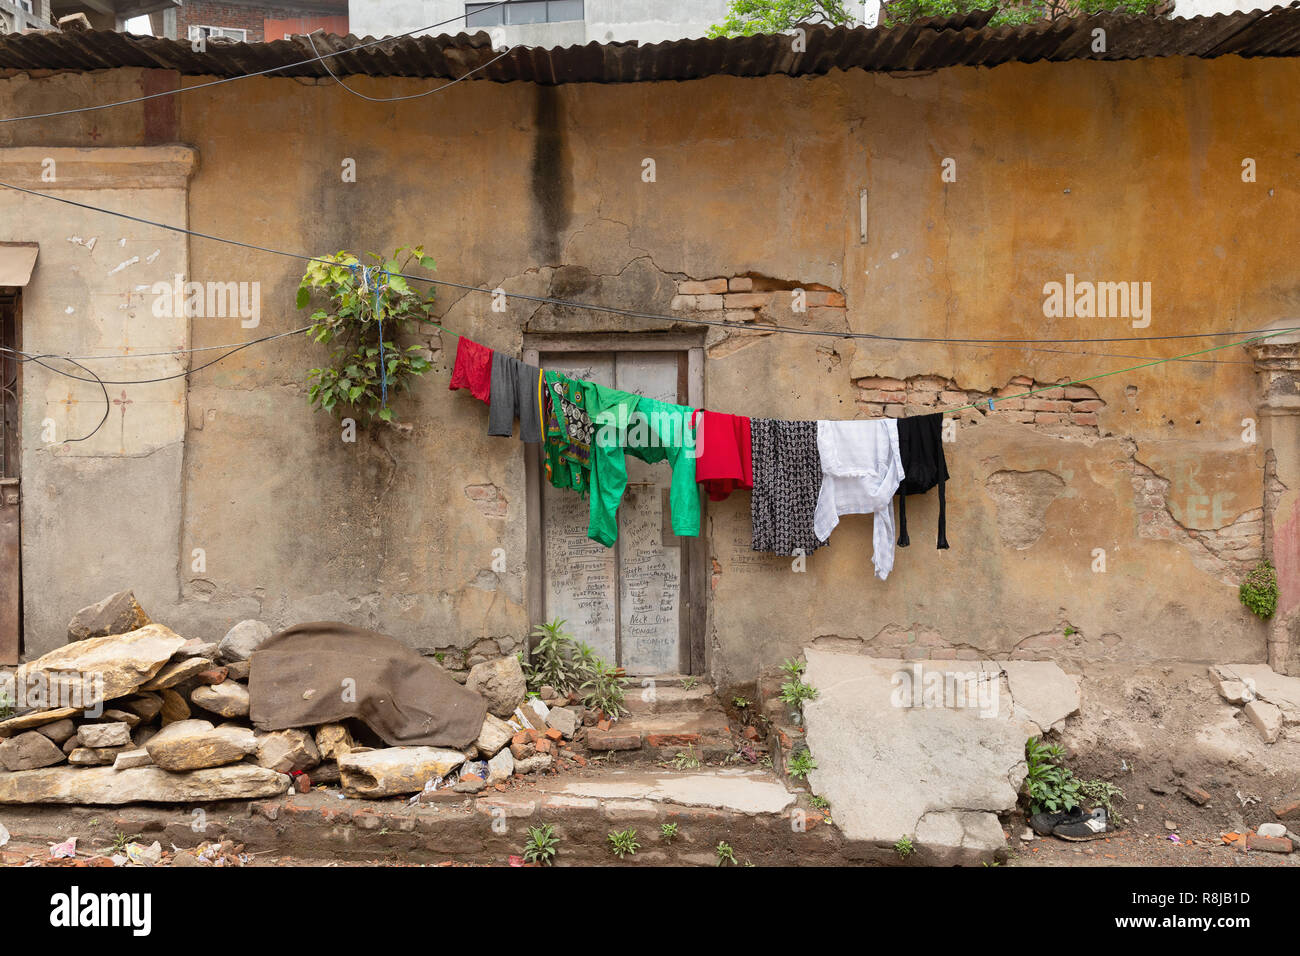 Laundry hanging outside a house in Kathmandu, Nepal Stock Photo